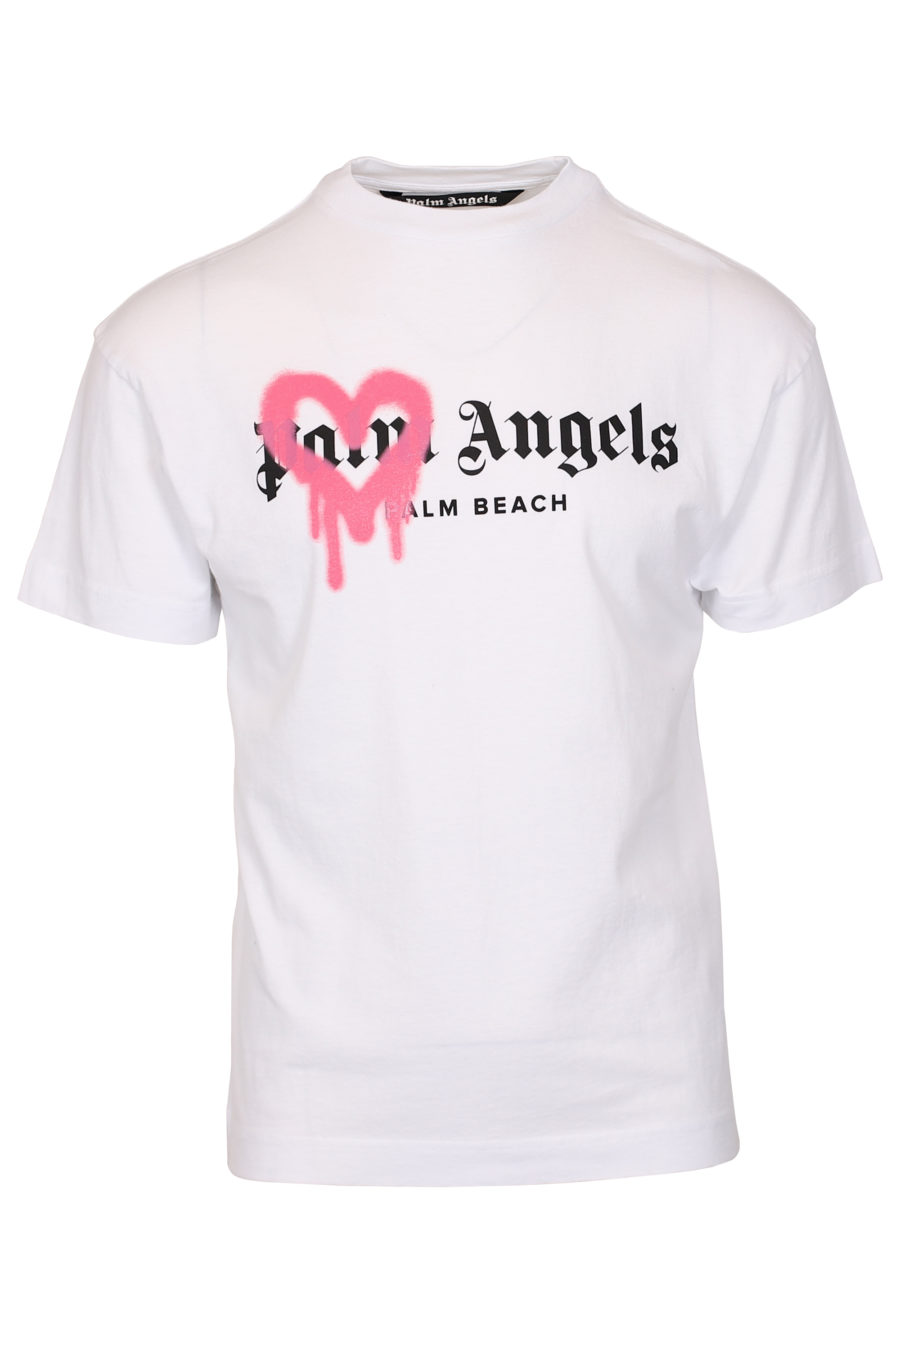 Weißes T-Shirt mit Palm Beach-Logo - IMG 1055